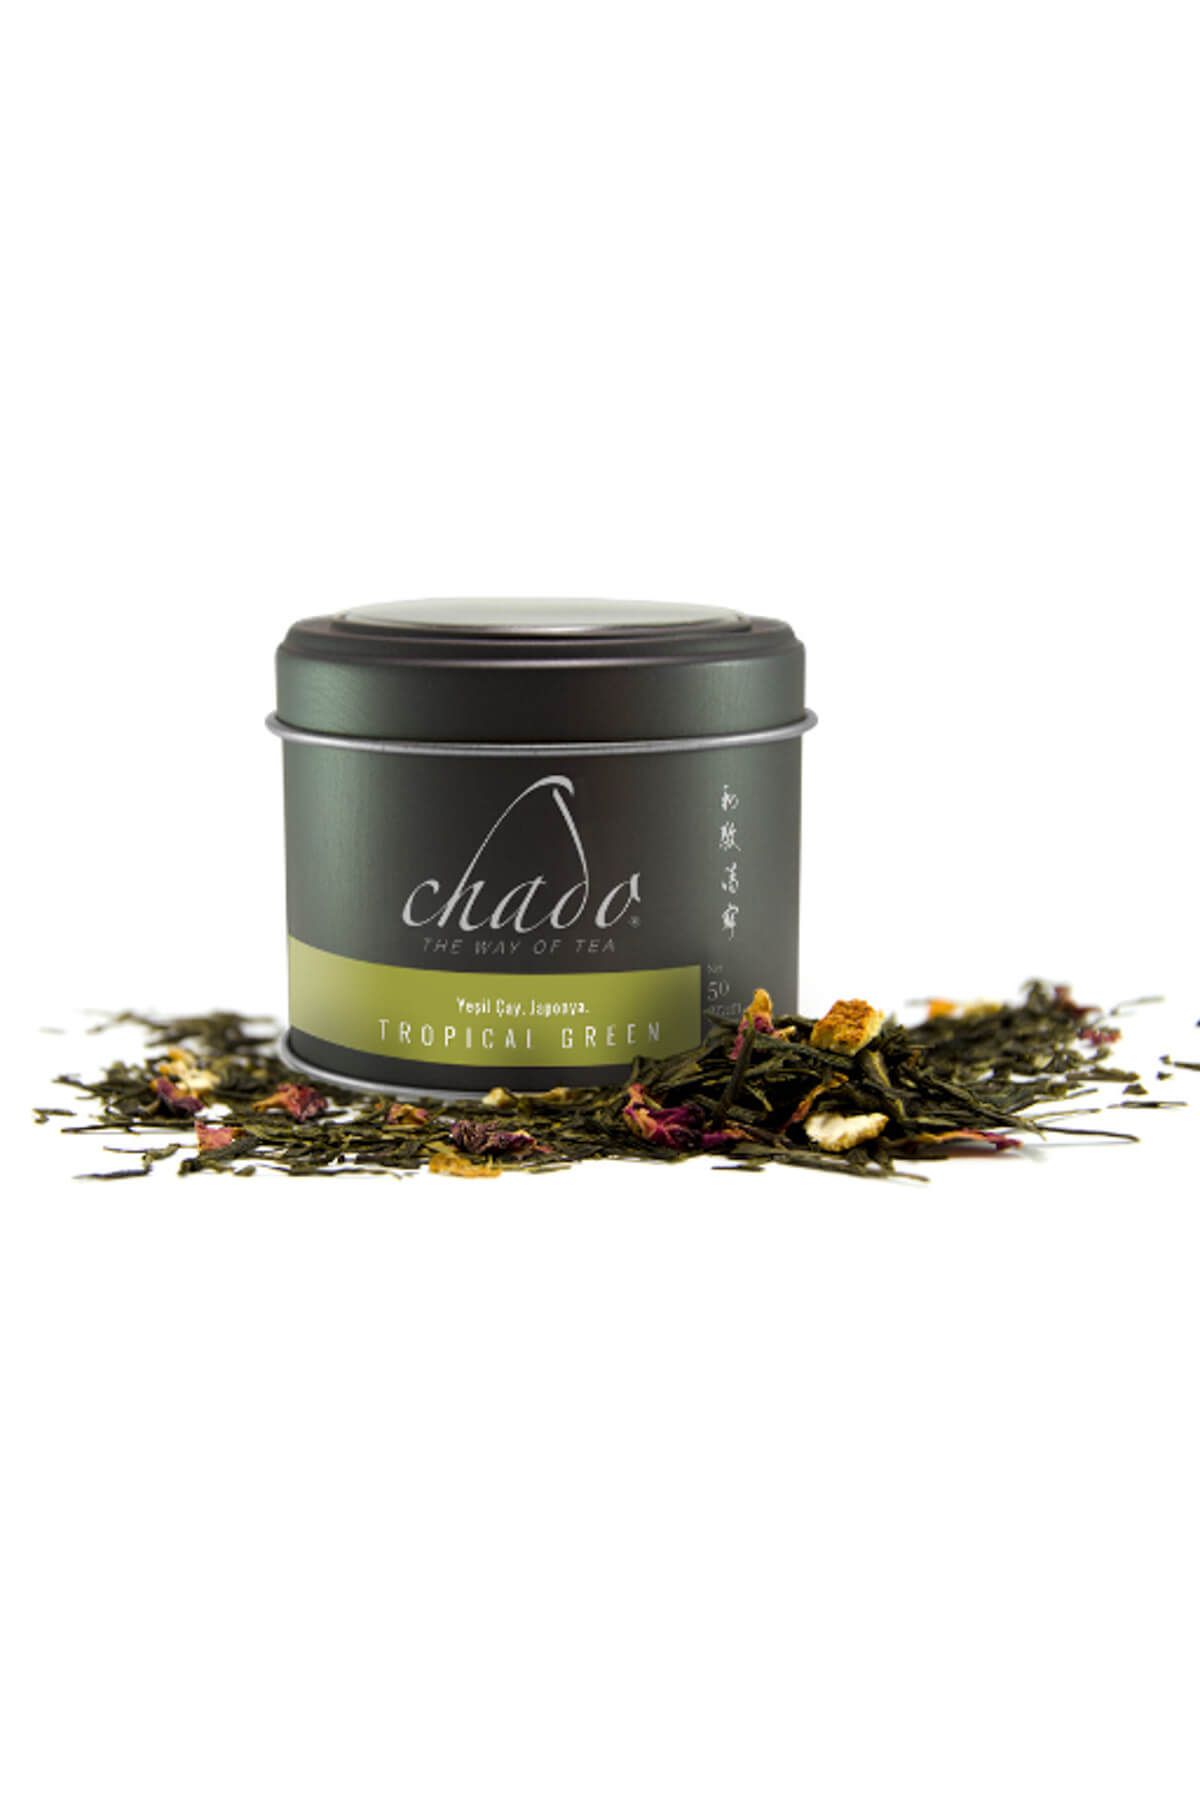 Chado Tea Tropica Green - Tropikal Meyveli Yeşil Çay 50 gr